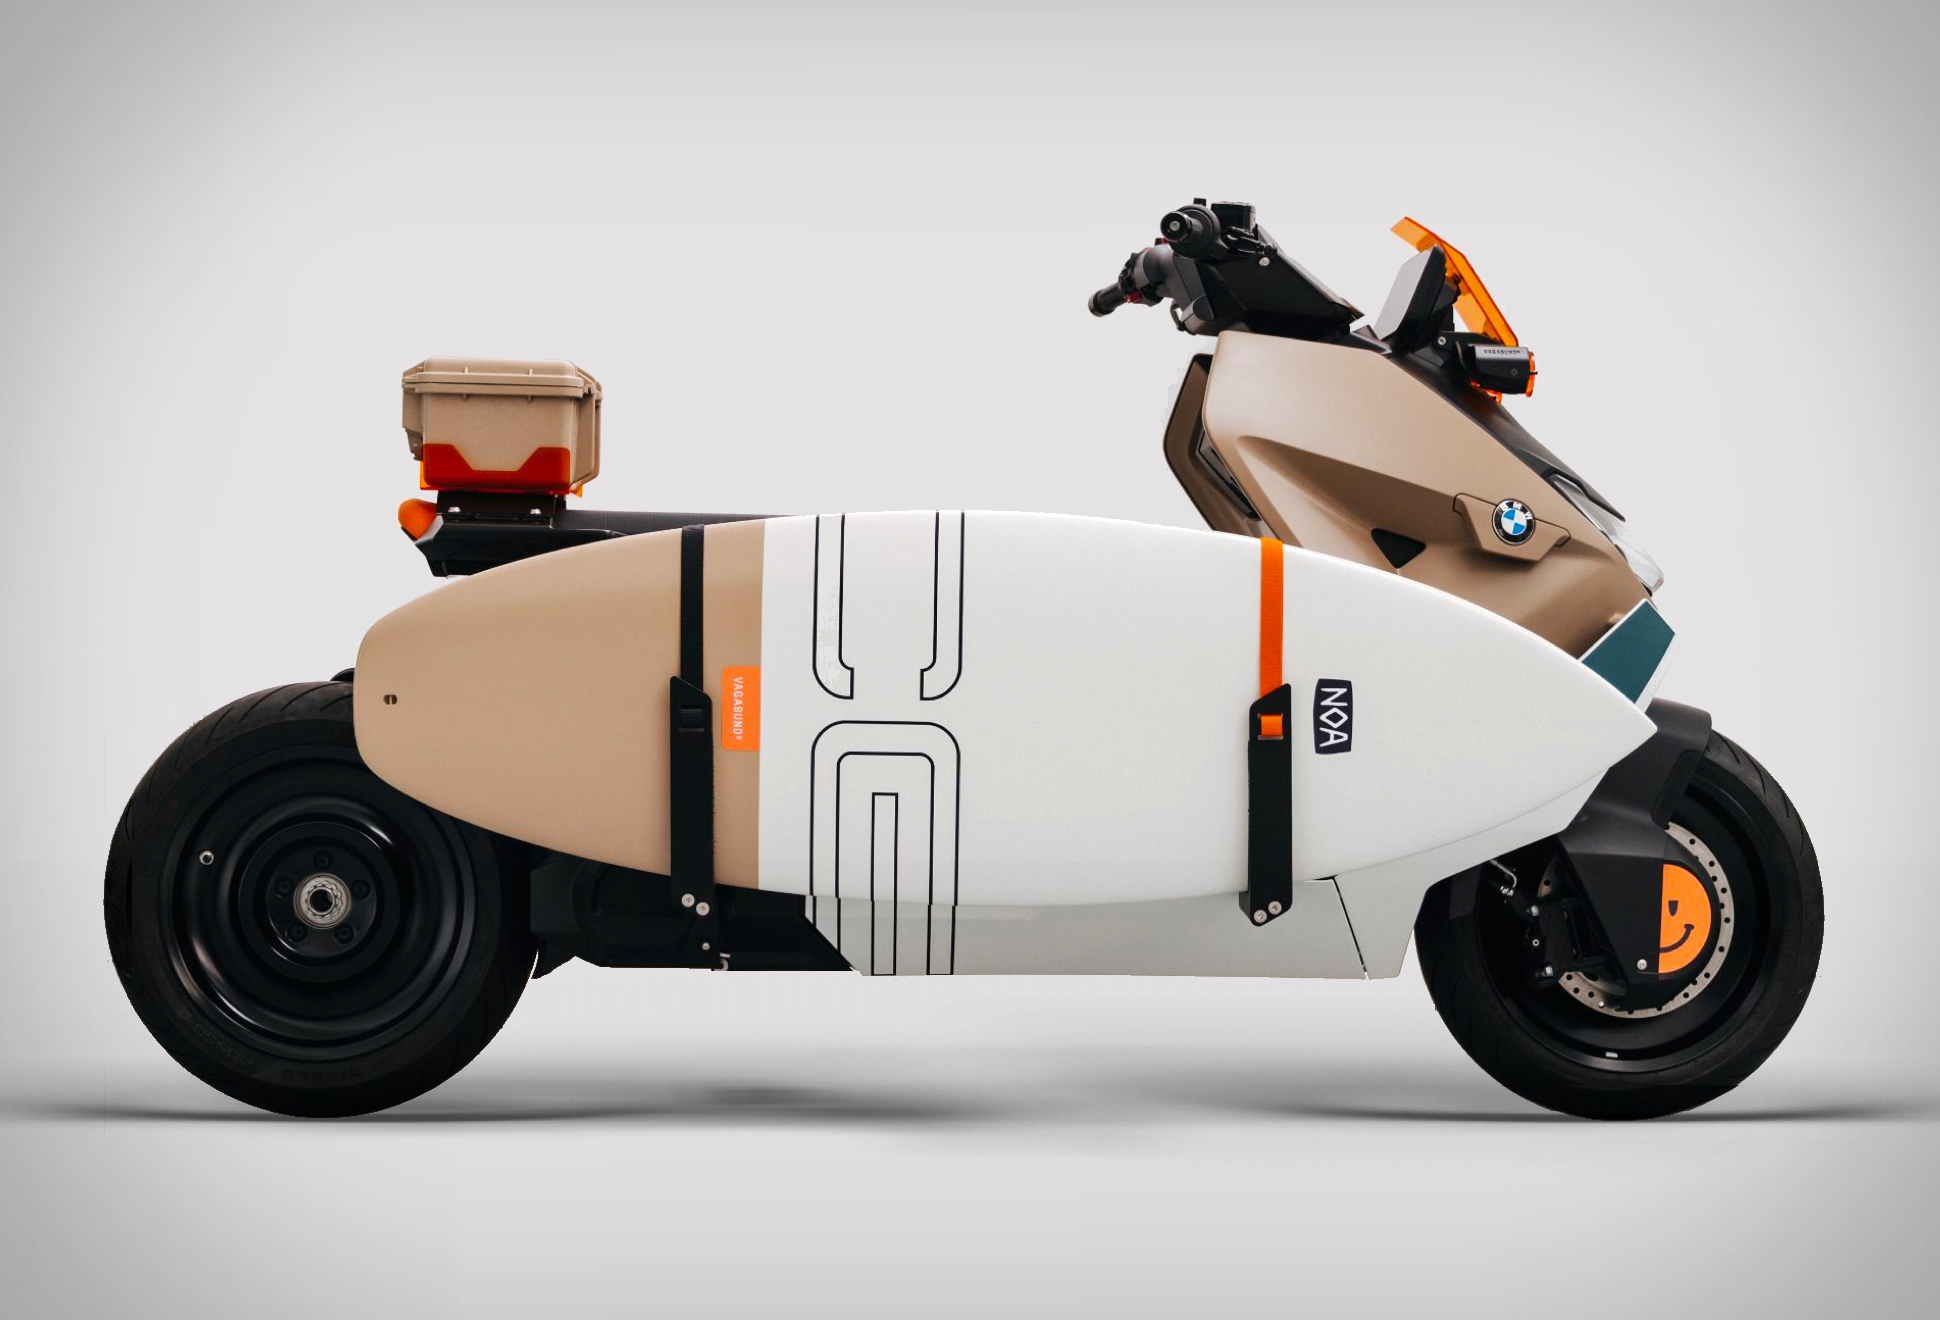 BMW CE 04 Vagabund Moto Concept | Image